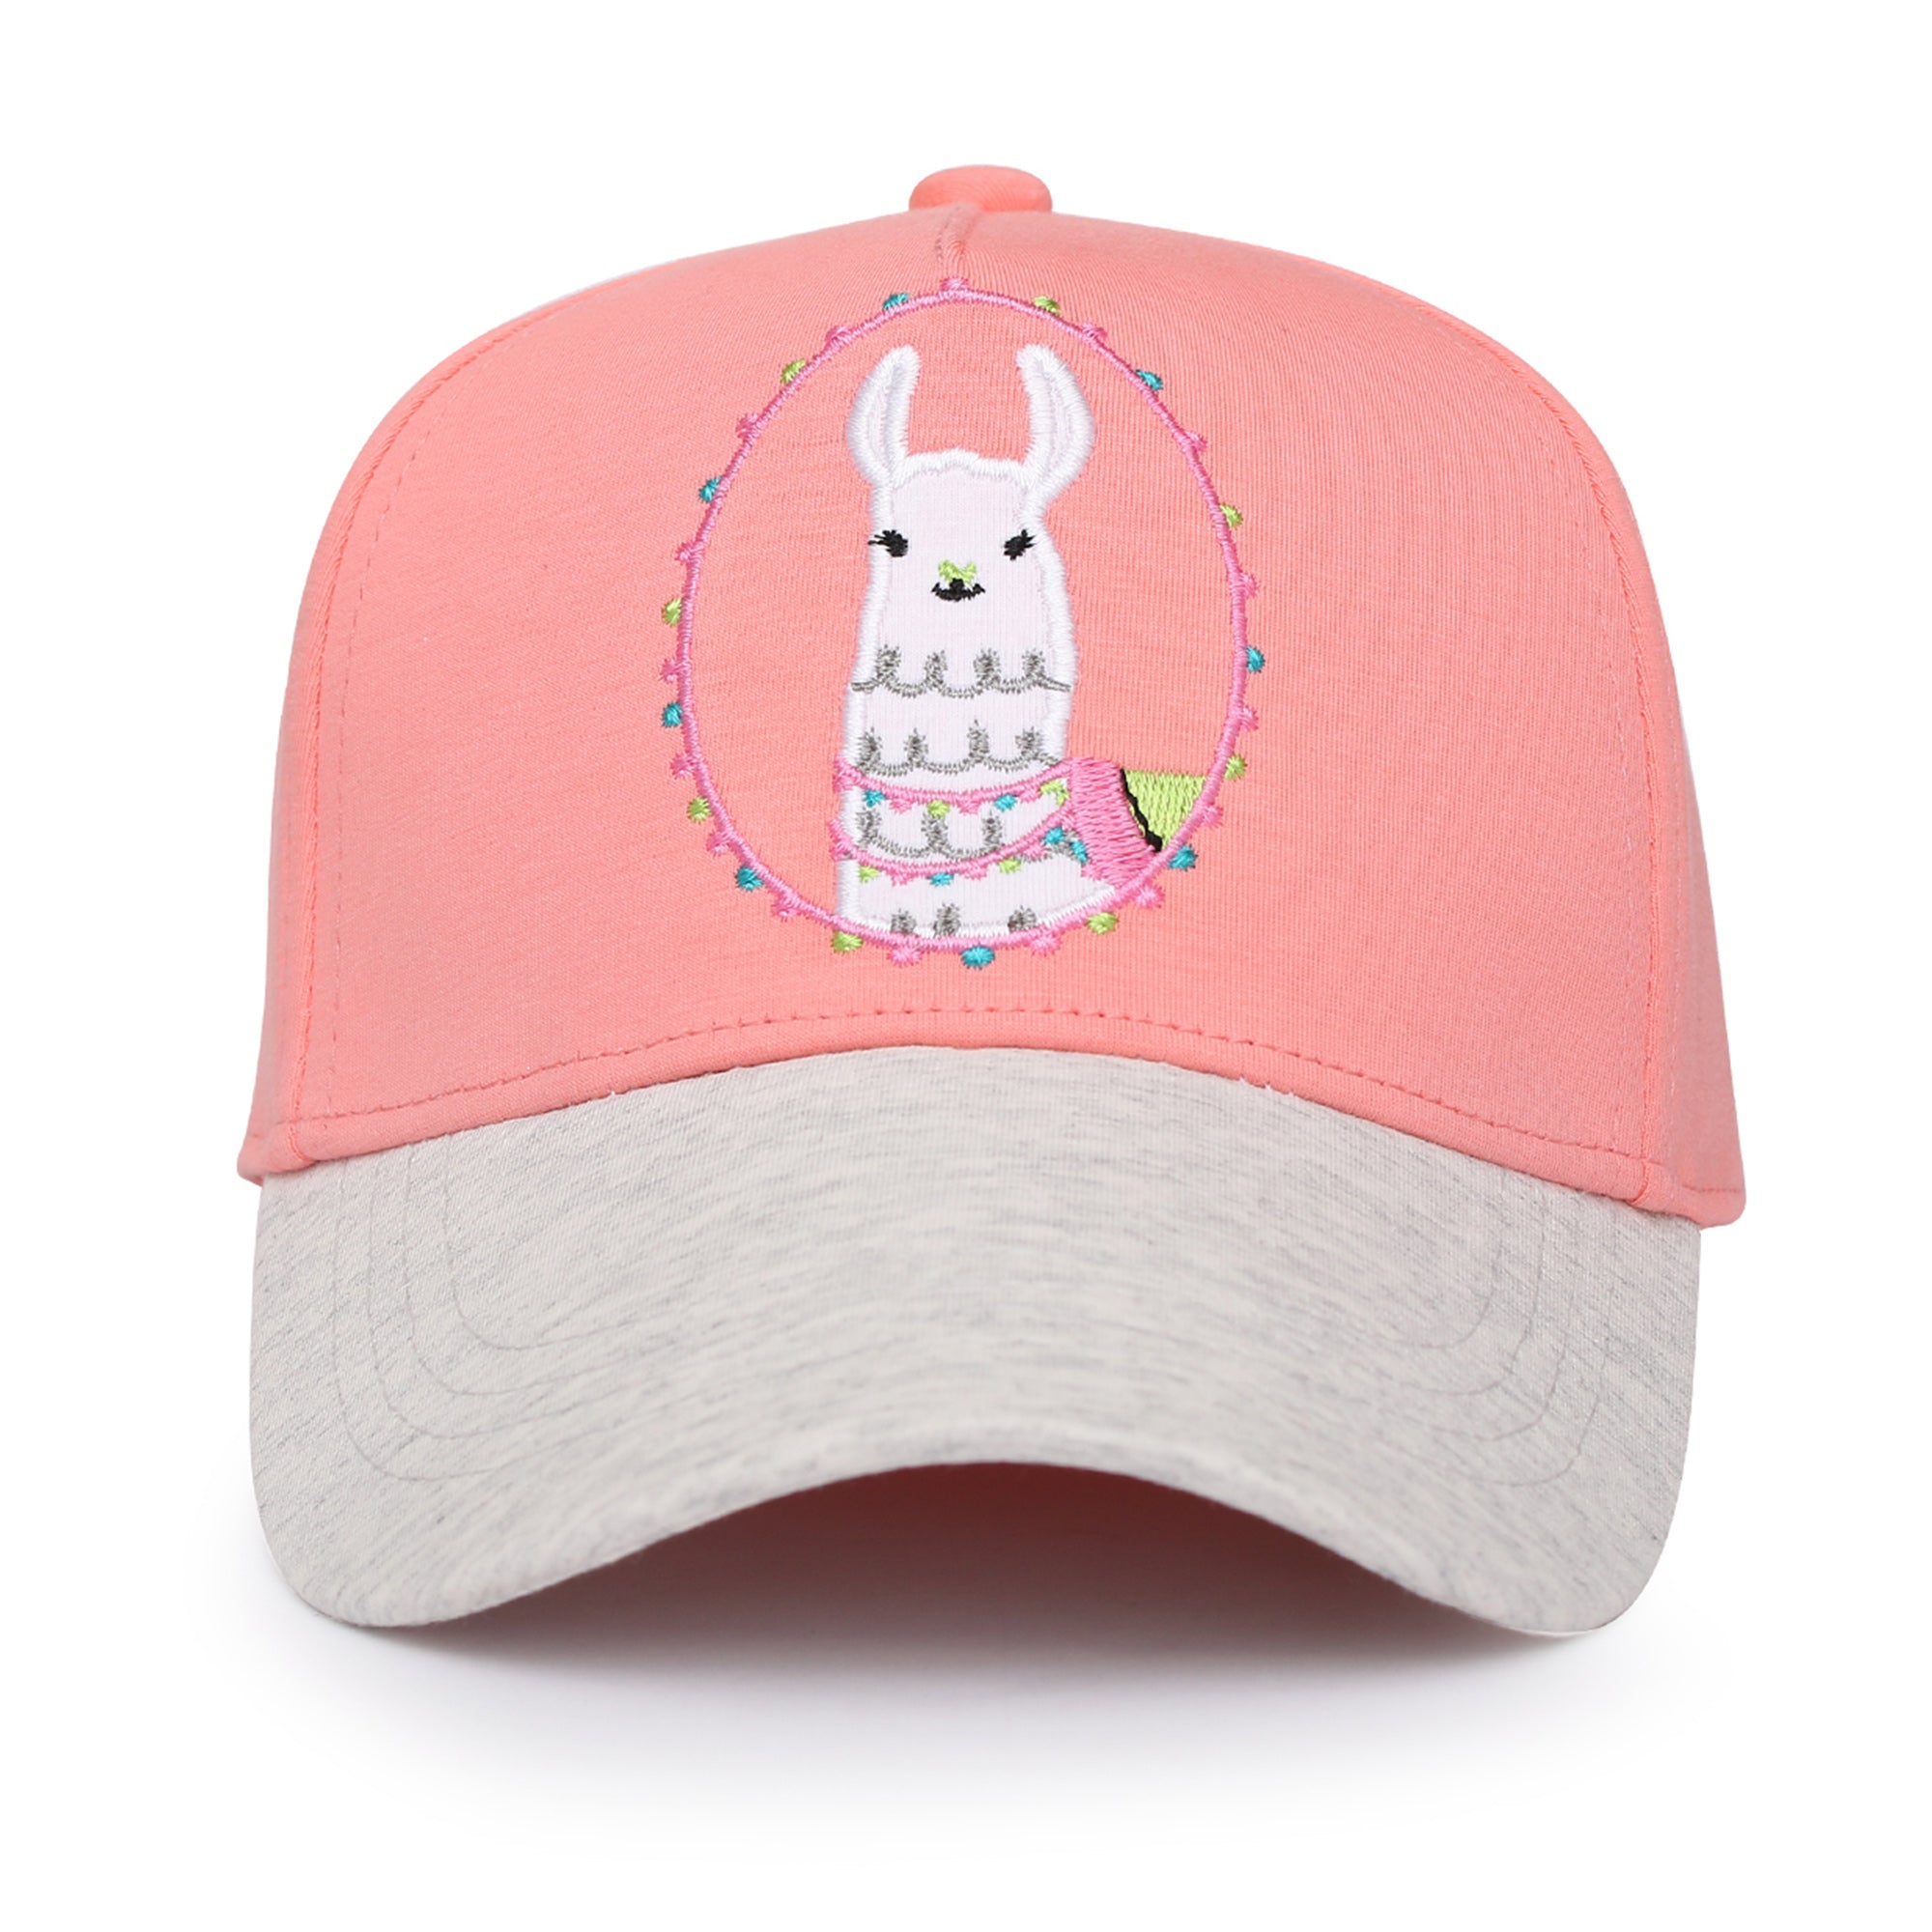 caps for girls, sunhat, hats for kids , fun hats